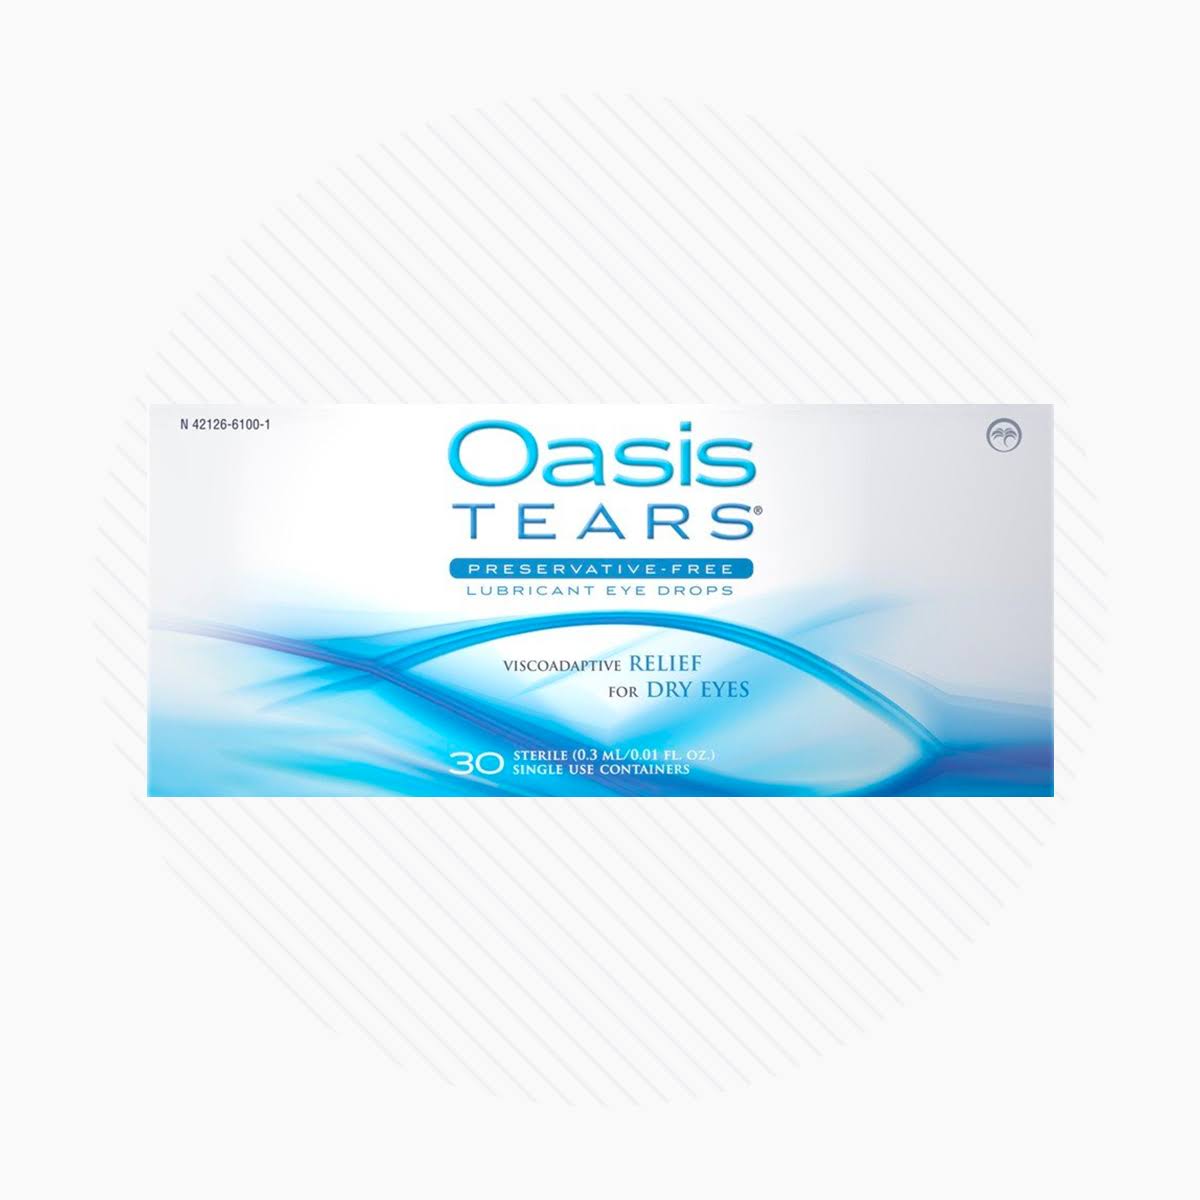 Oasis Tears Preservative-Free Lubricant Eye Drops